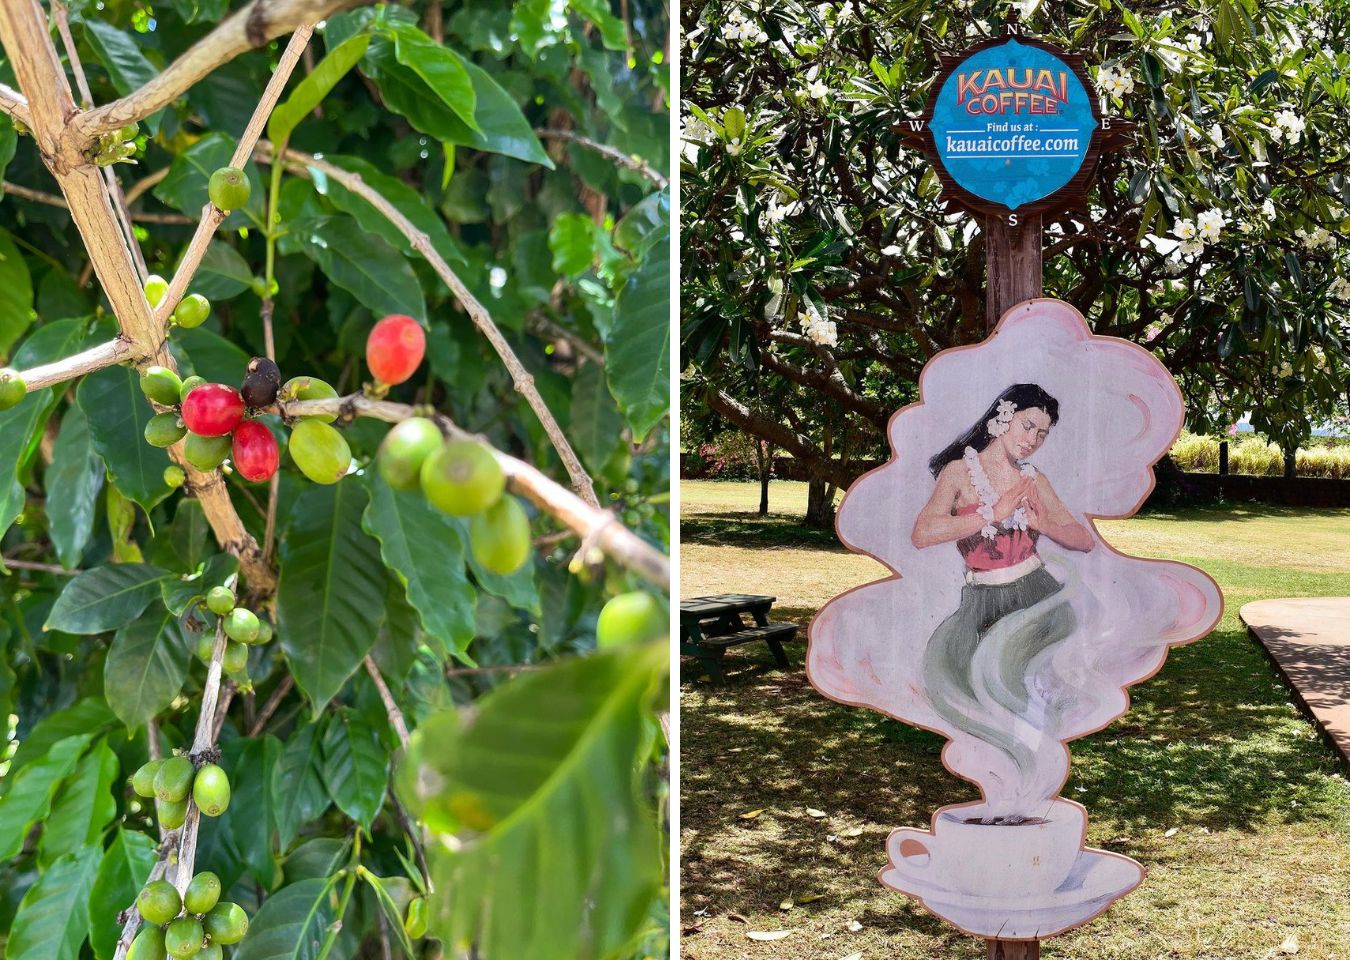 Kauai coffee Discover Kauai Coffee beans and rich coffee brewing methods from the world of Kauai Coffee